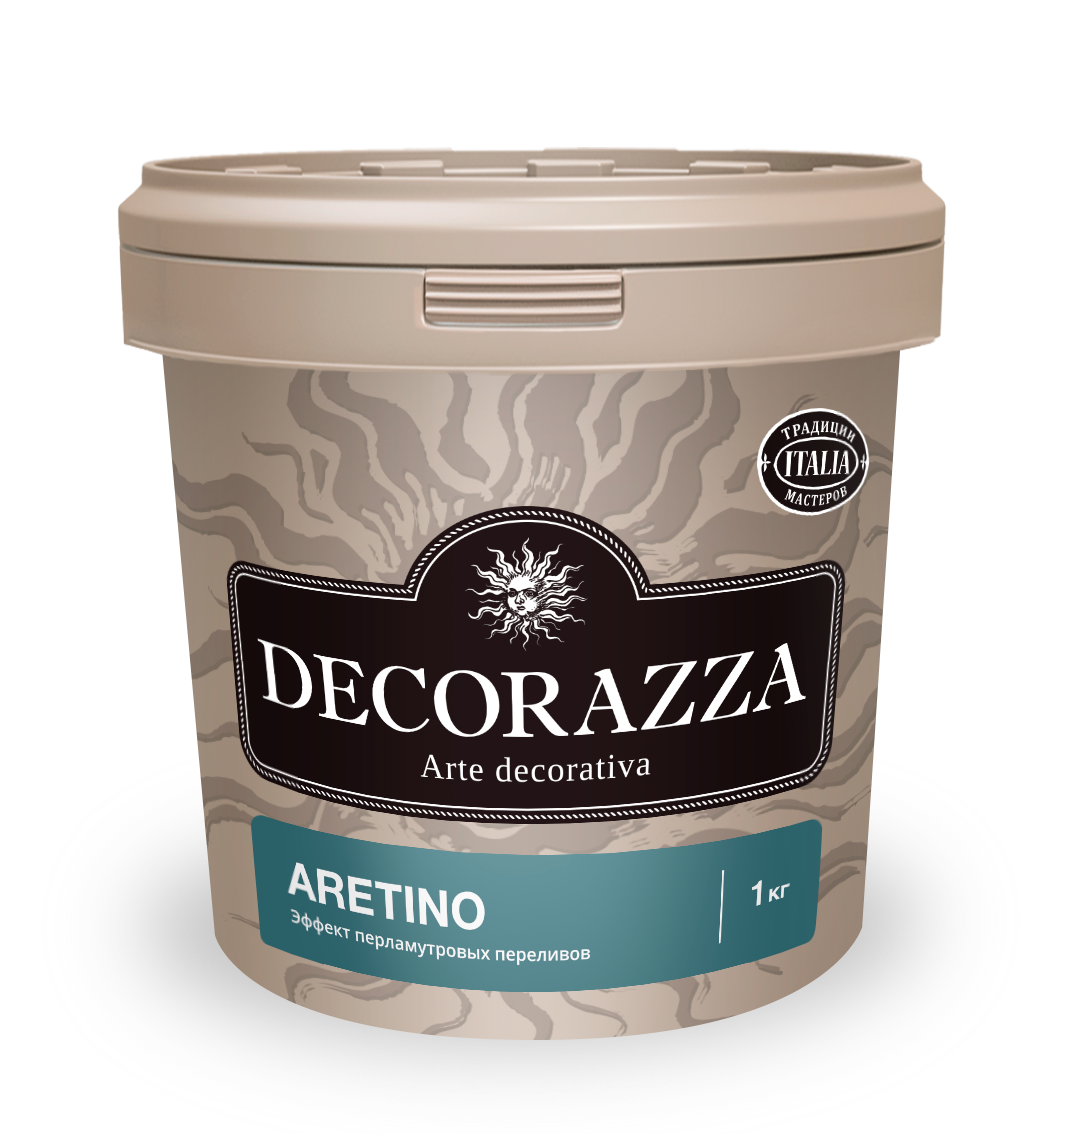 Декоративная штукатурка для стен и потолка Decorazza Aretino AR 001, 1 л